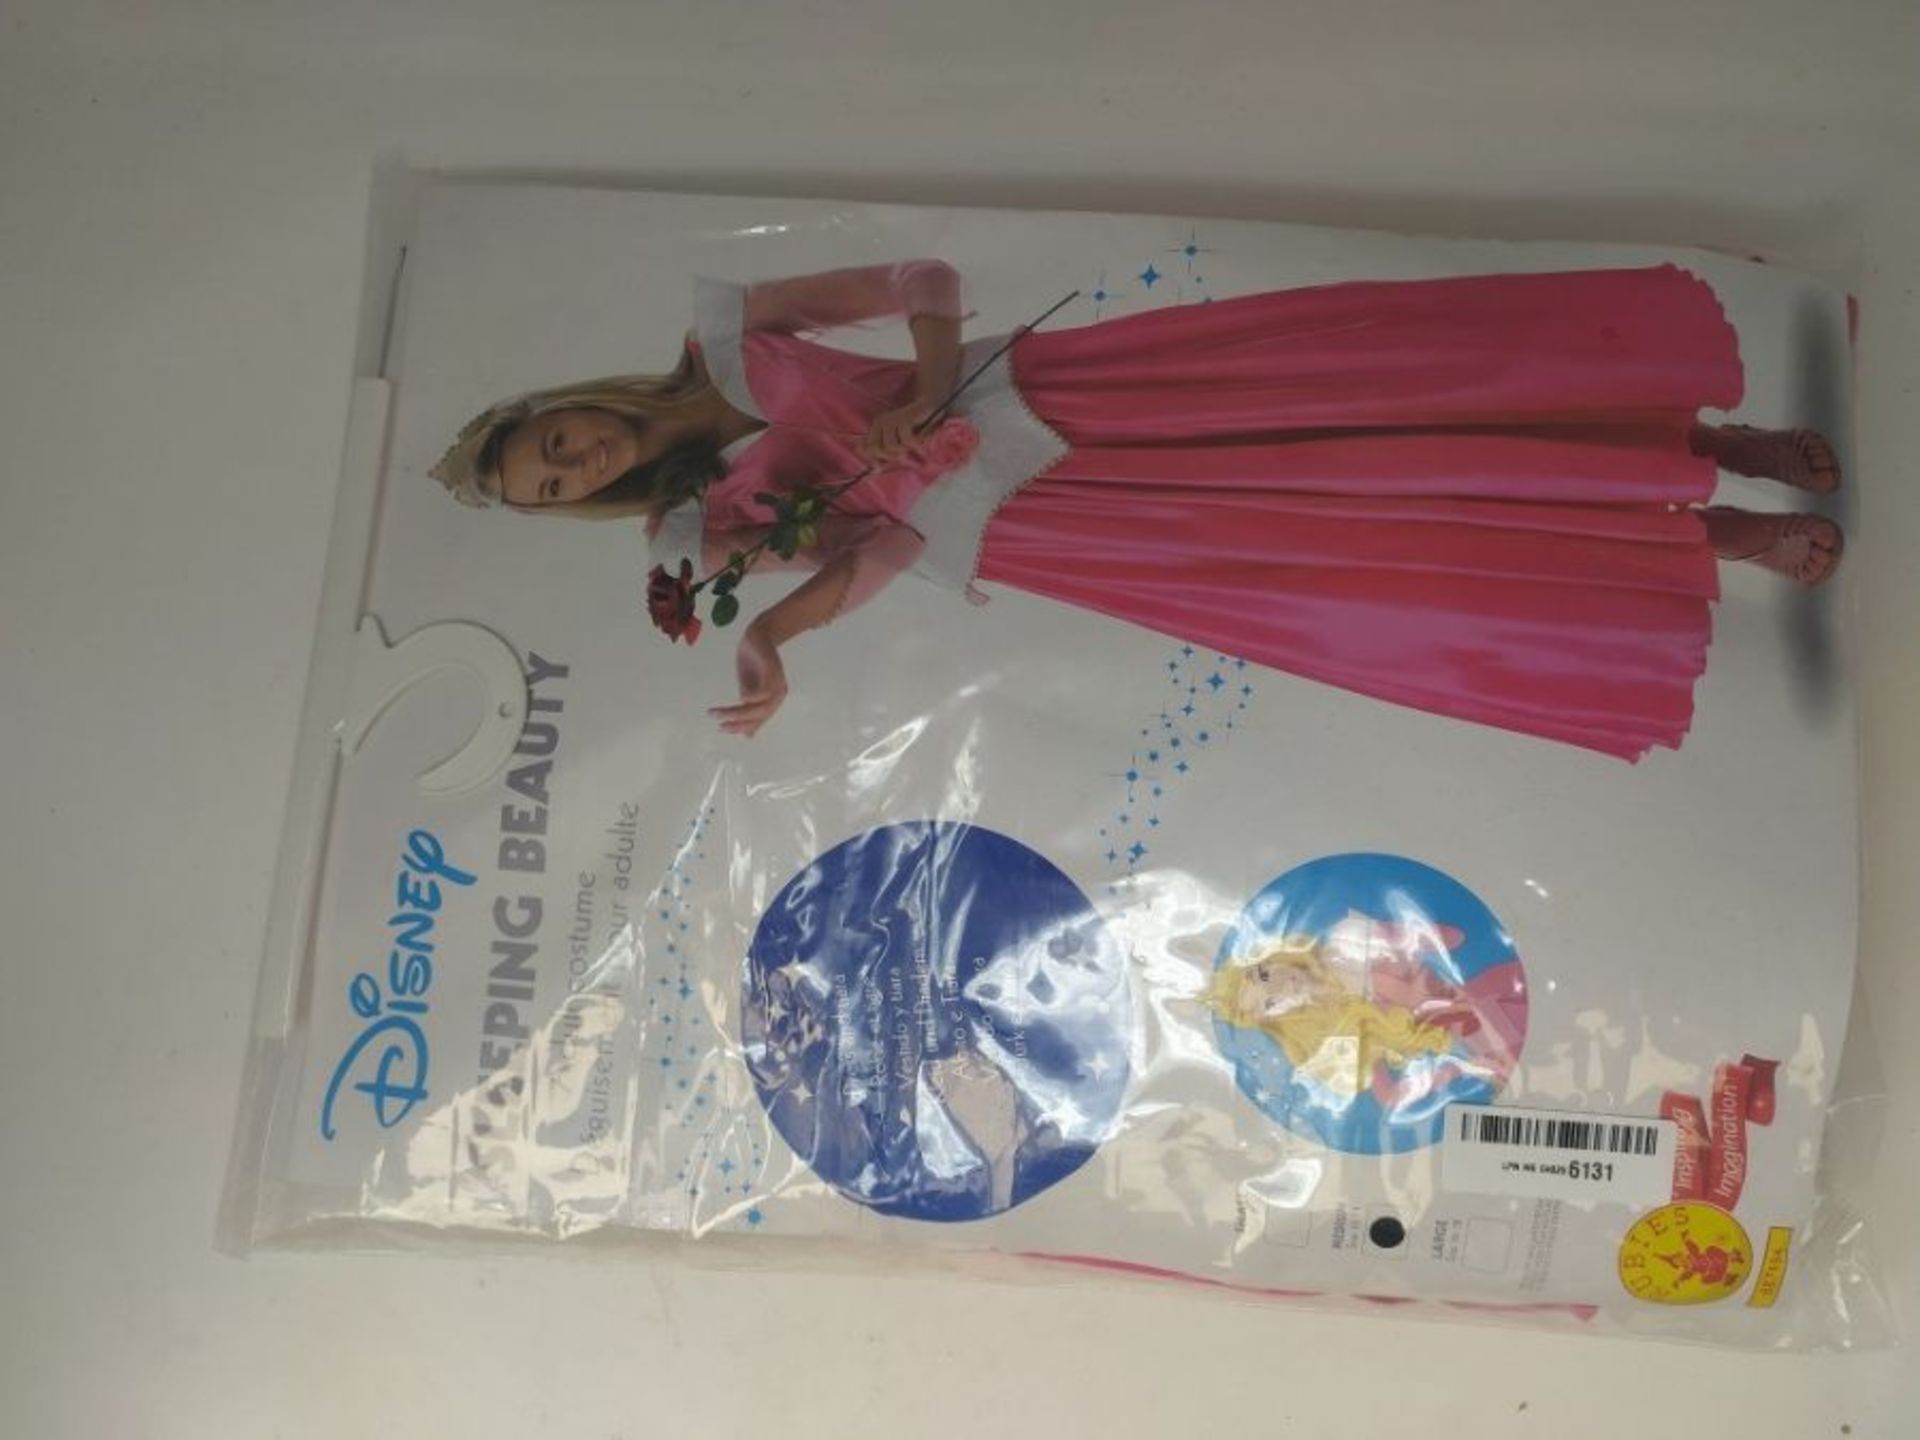 Rubie's Official Ladies Sleeping Beauty Disney Princess, Adult Costume - Medium - Image 2 of 2